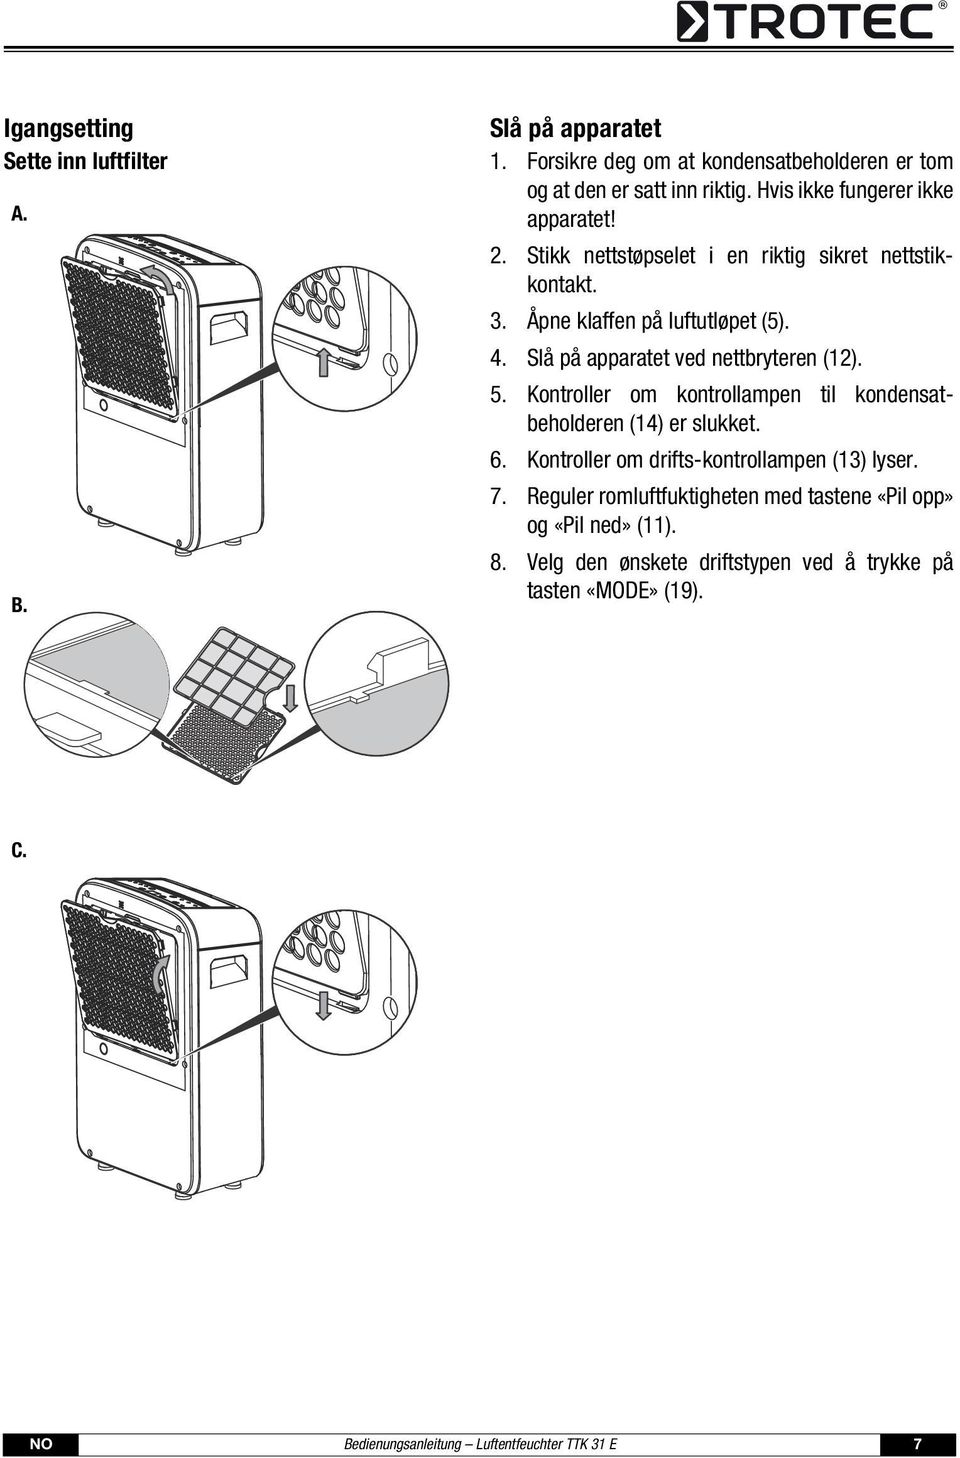 Slå på apparatet ved nettbryteren (12). 5. Kontroller om kontrollampen til kondensatbeholderen (14) er slukket. 6.